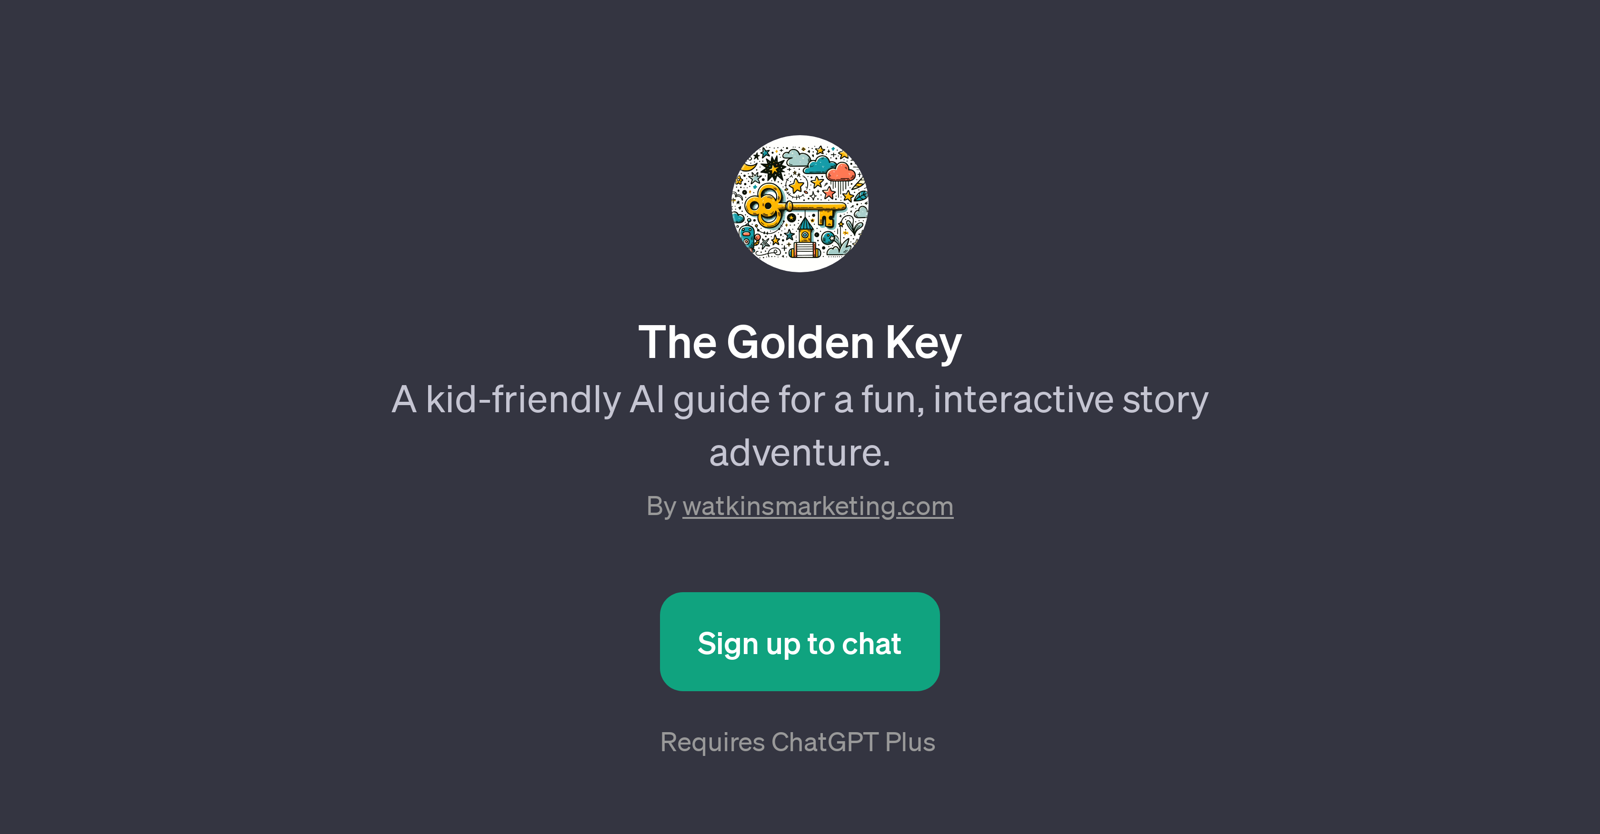 The Golden Key website